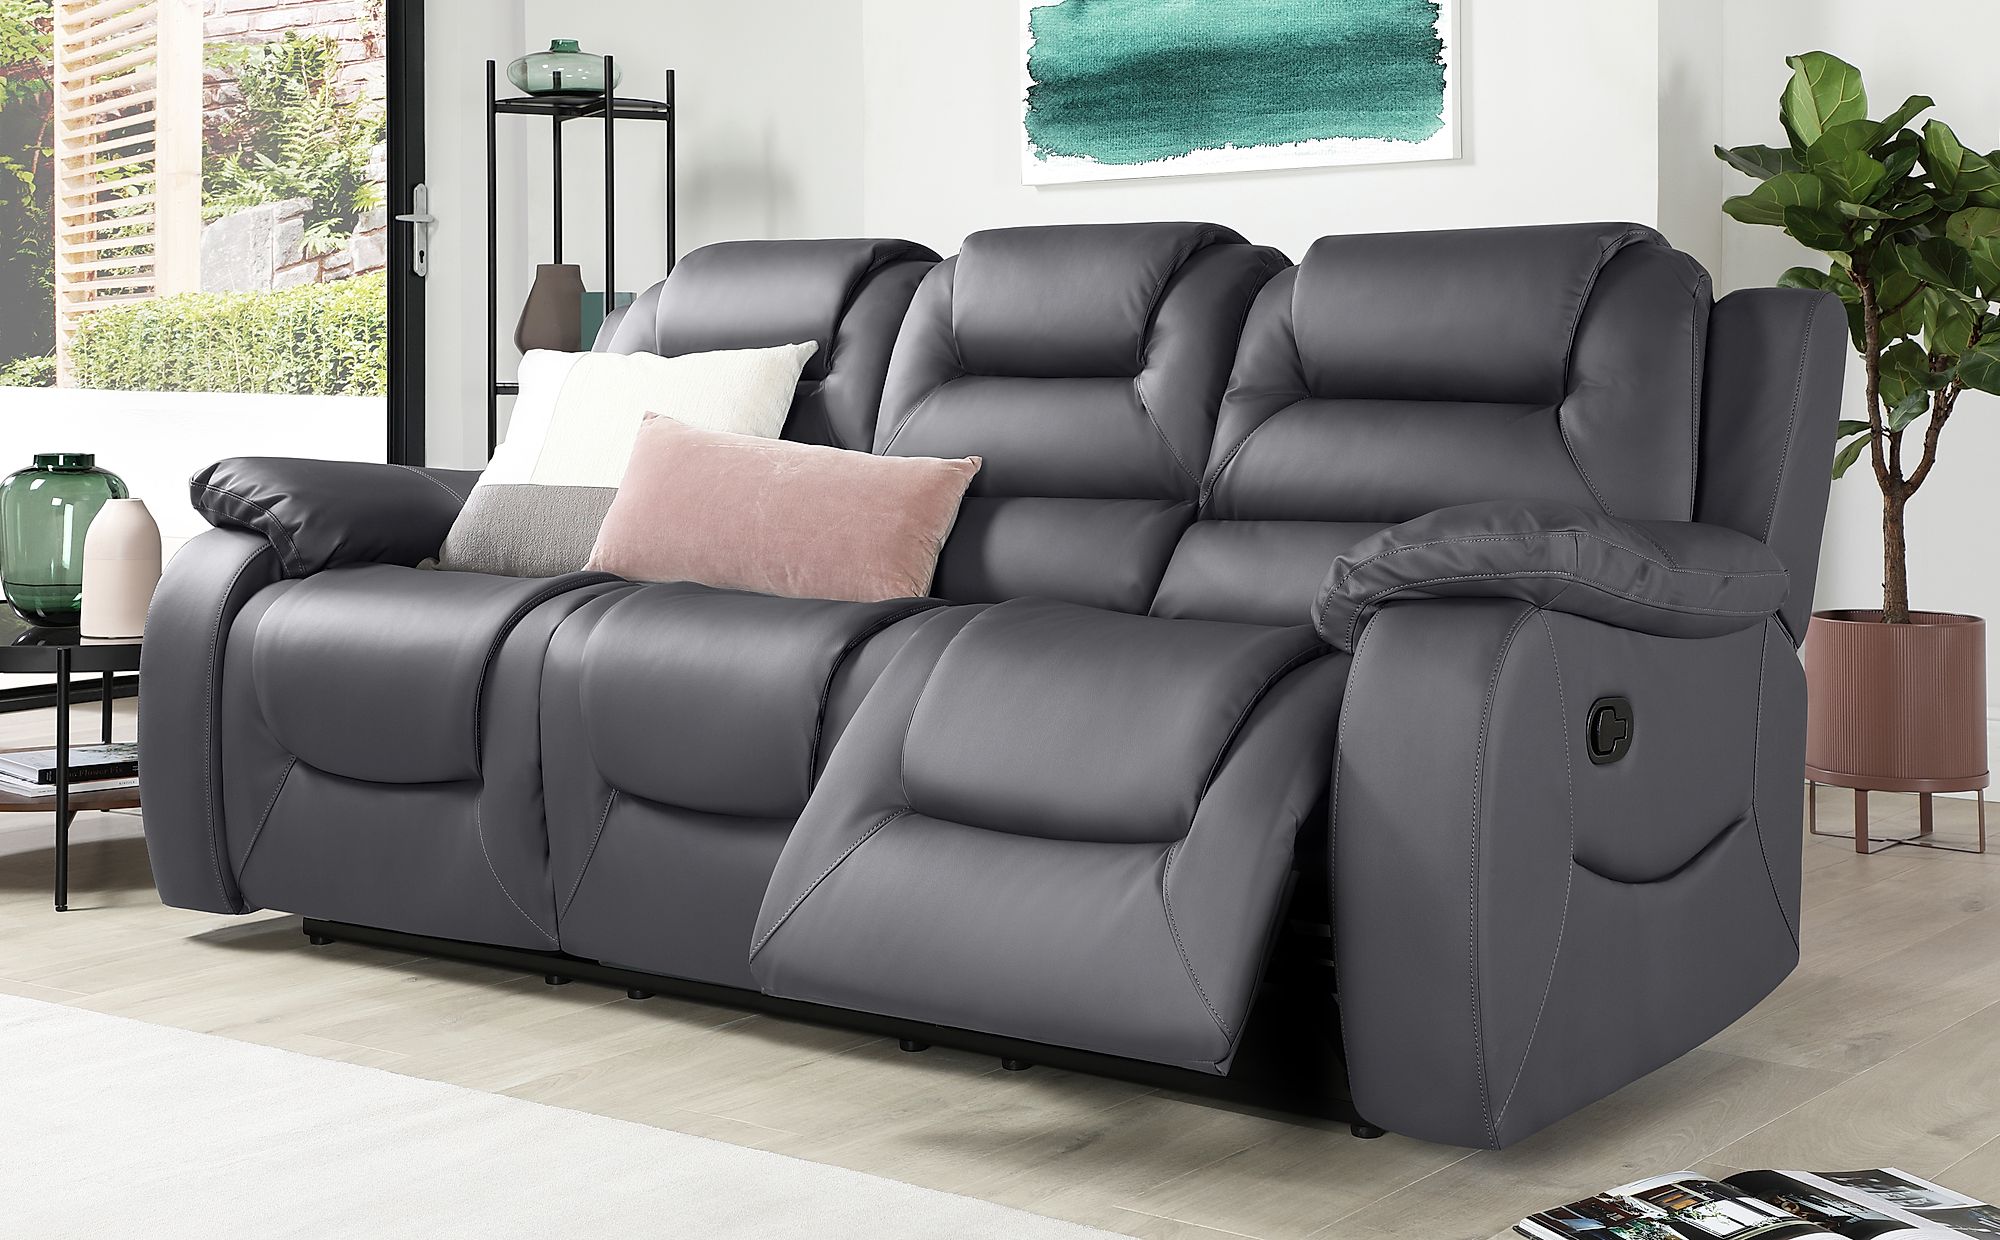 3 seat leather recliner sofa coverswalmart